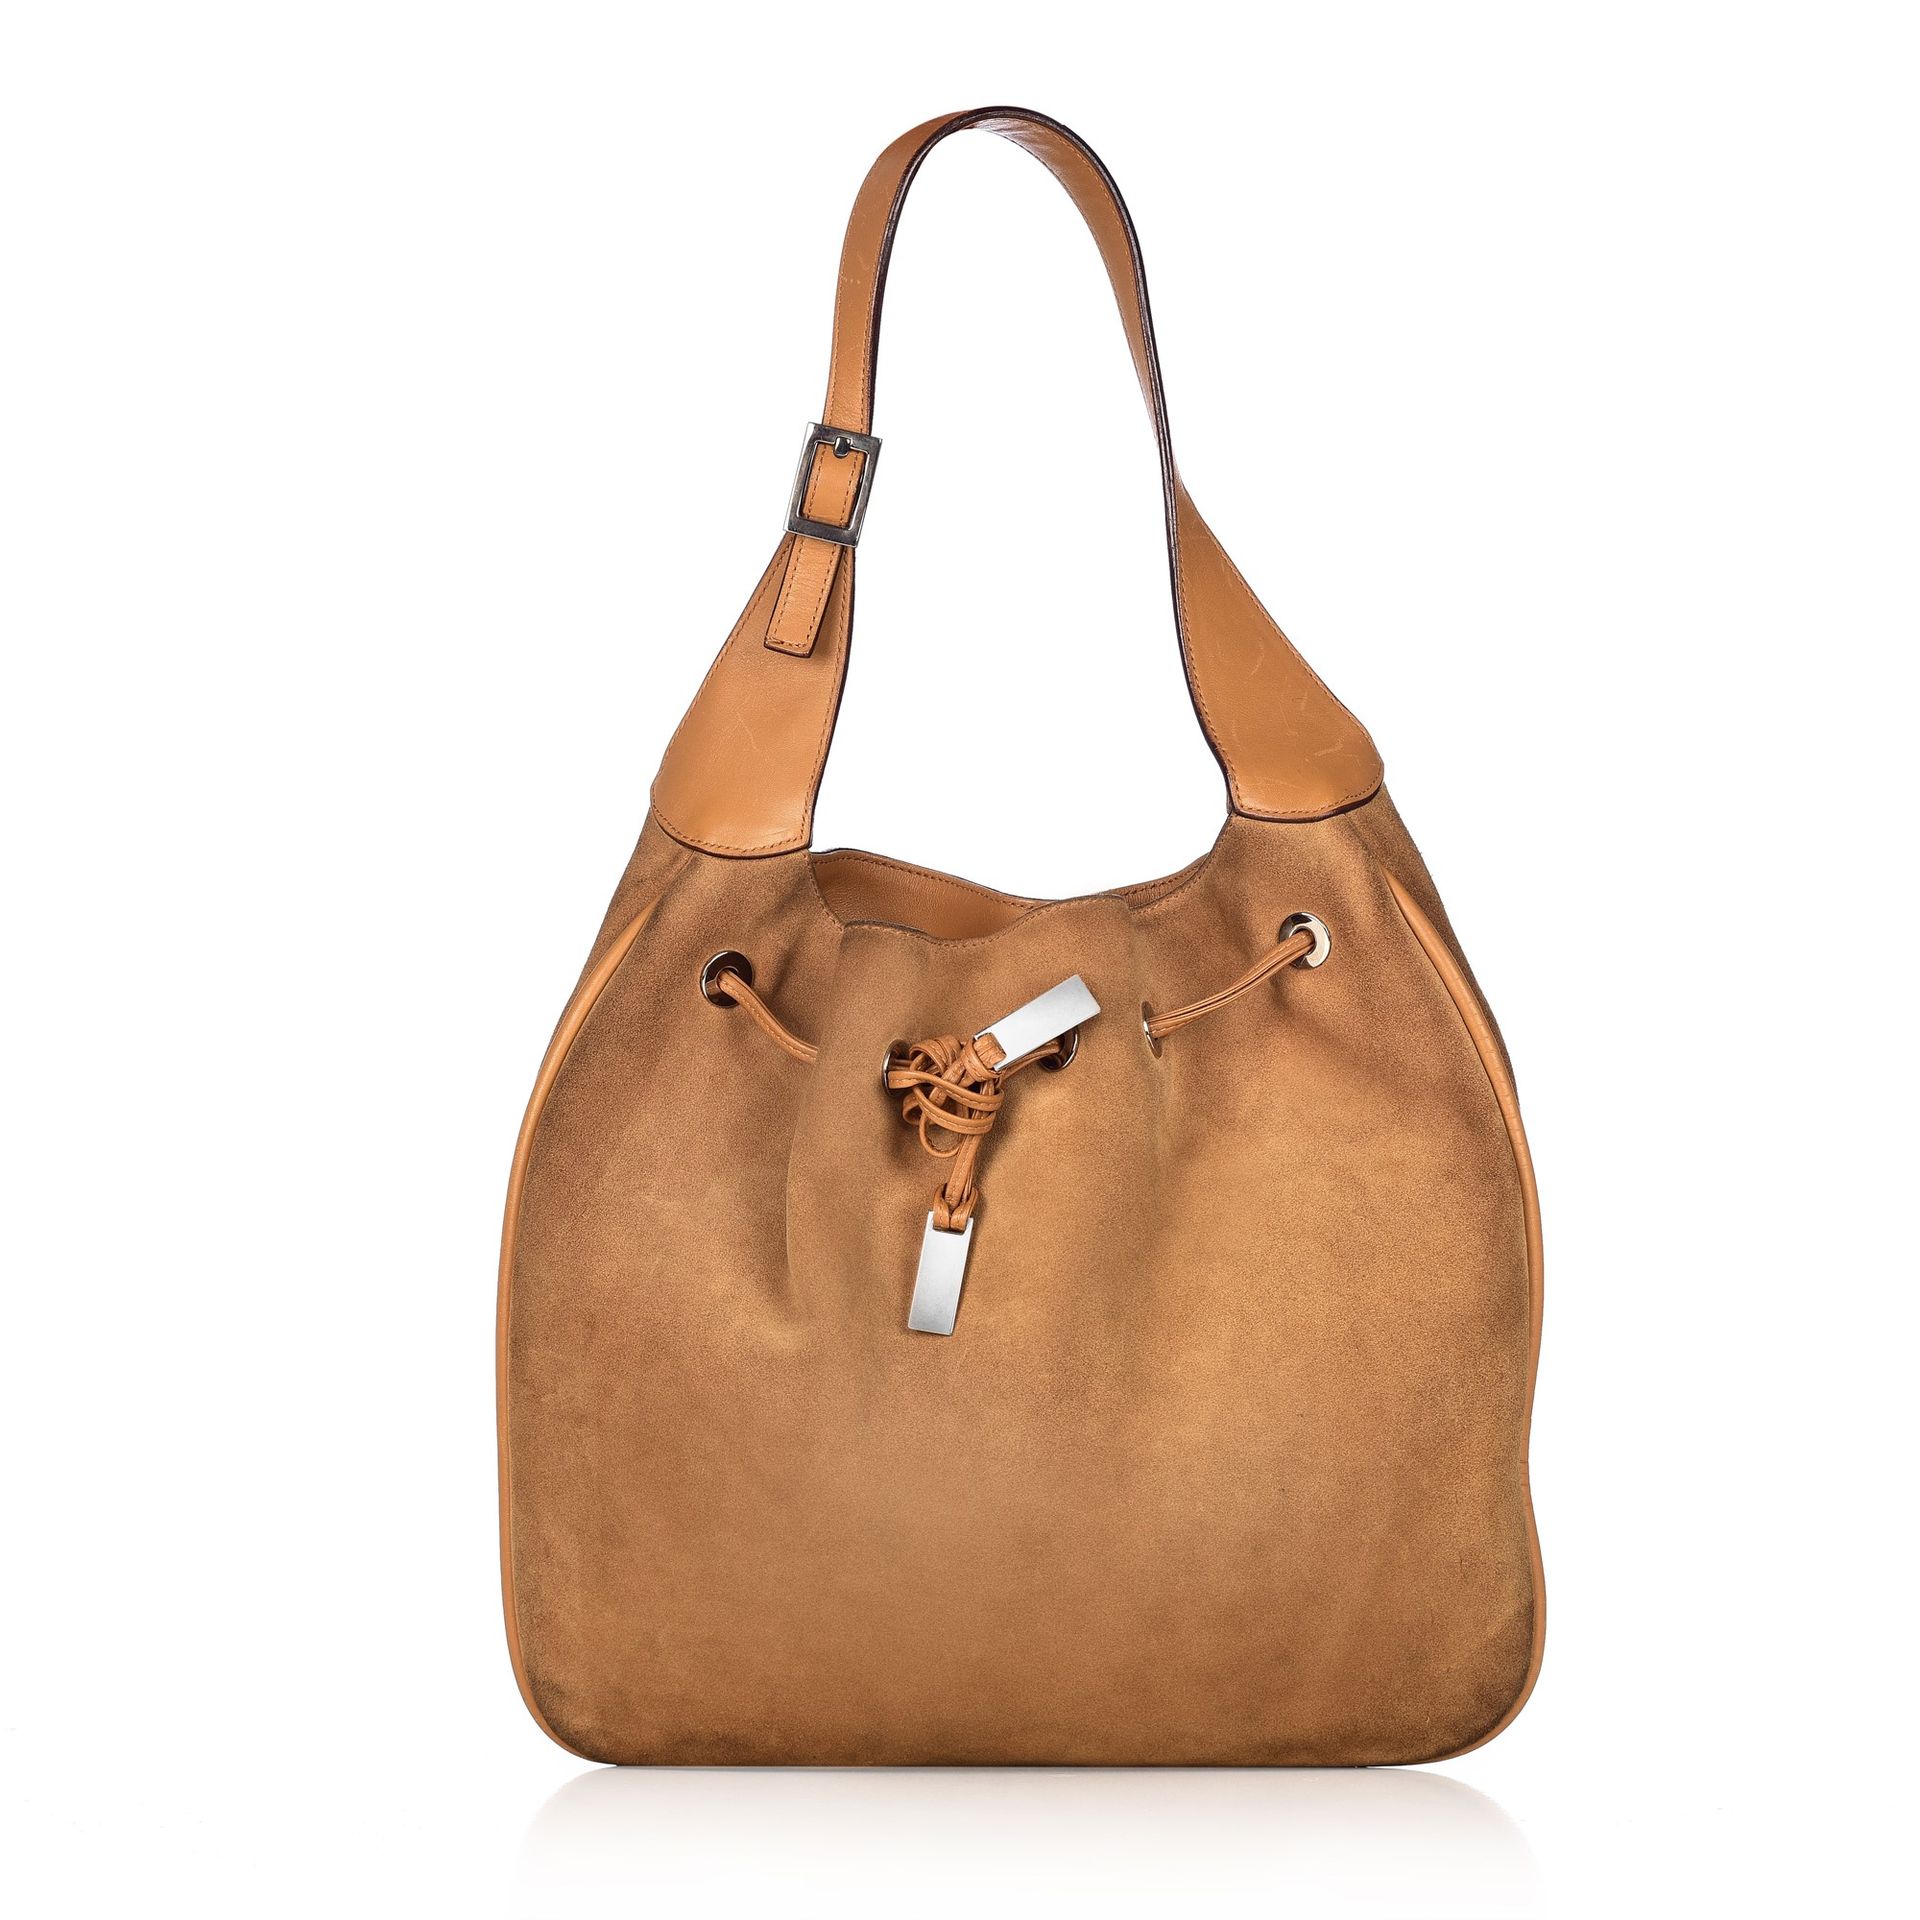 GUCCI Gucci shoulder bag in camel-colored suede, leather trim and shoulder strap&hellip;